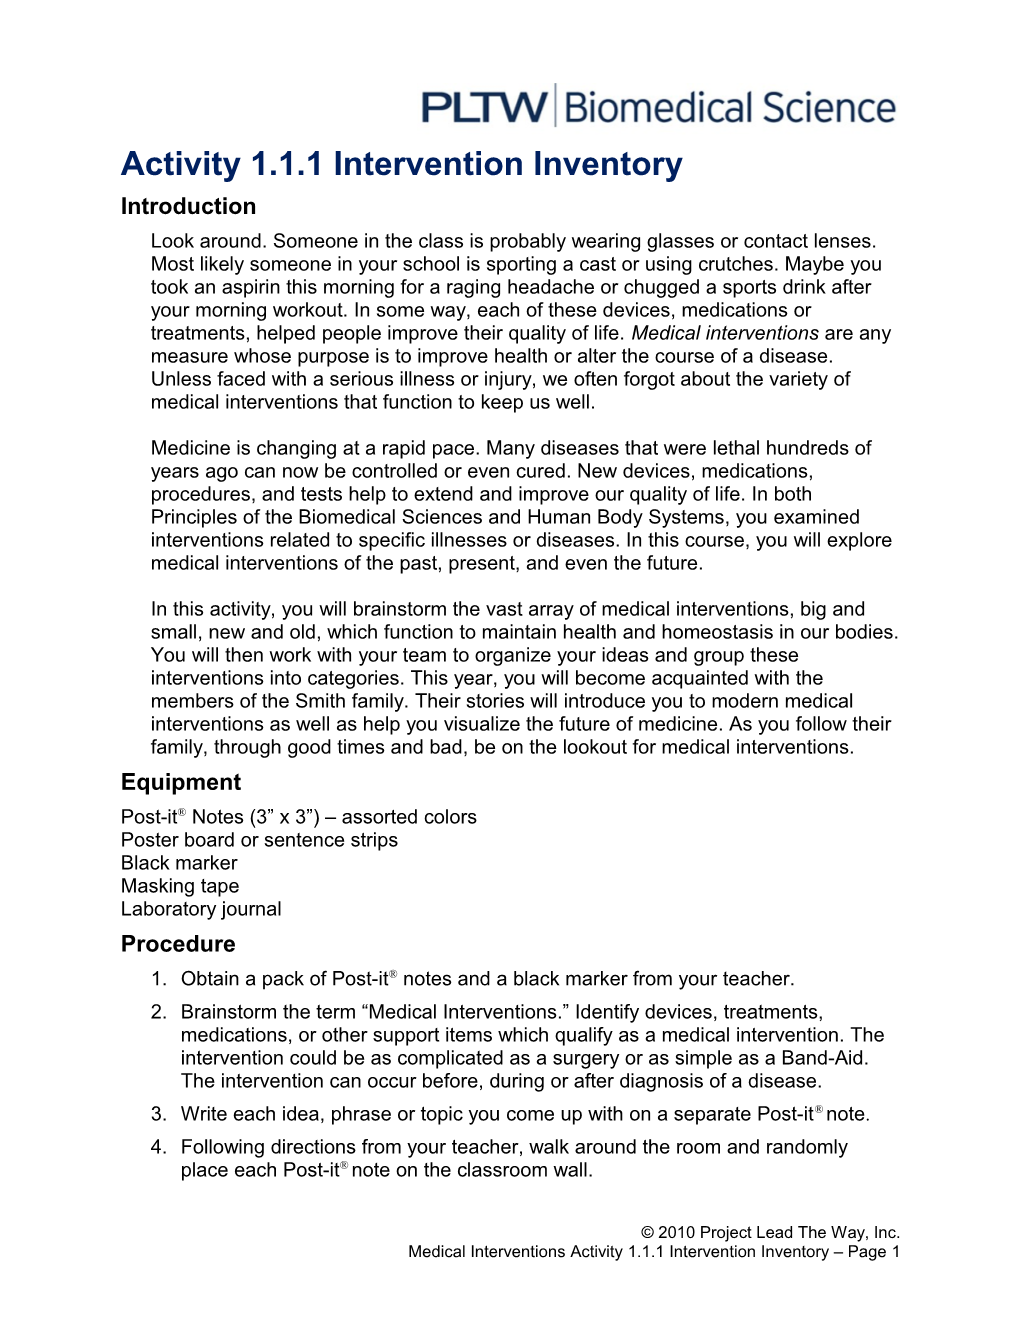 Activity 1.1.1 Intervention Inventory